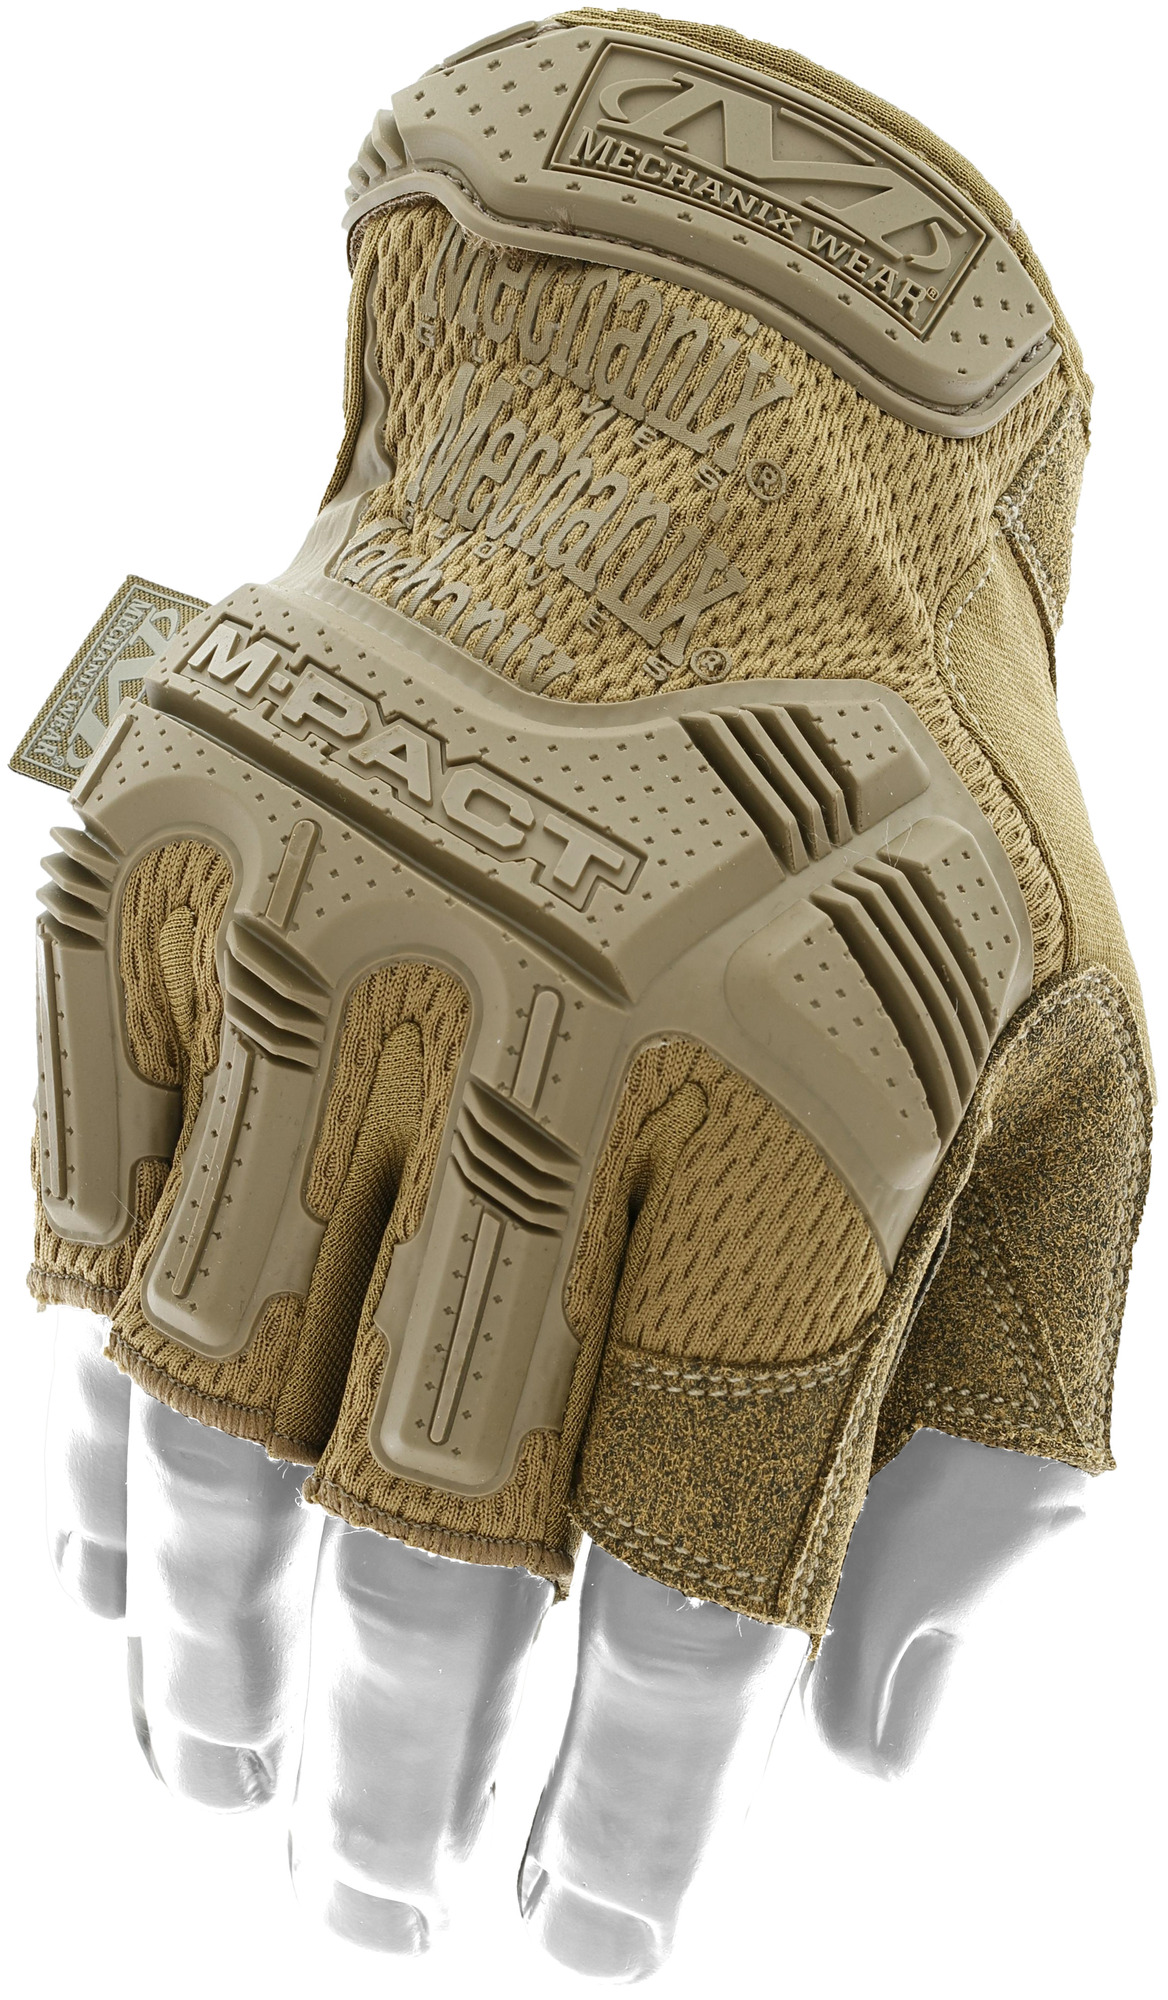 MECHANIX rukavice bez prstov M-Pact - Coyote M/9